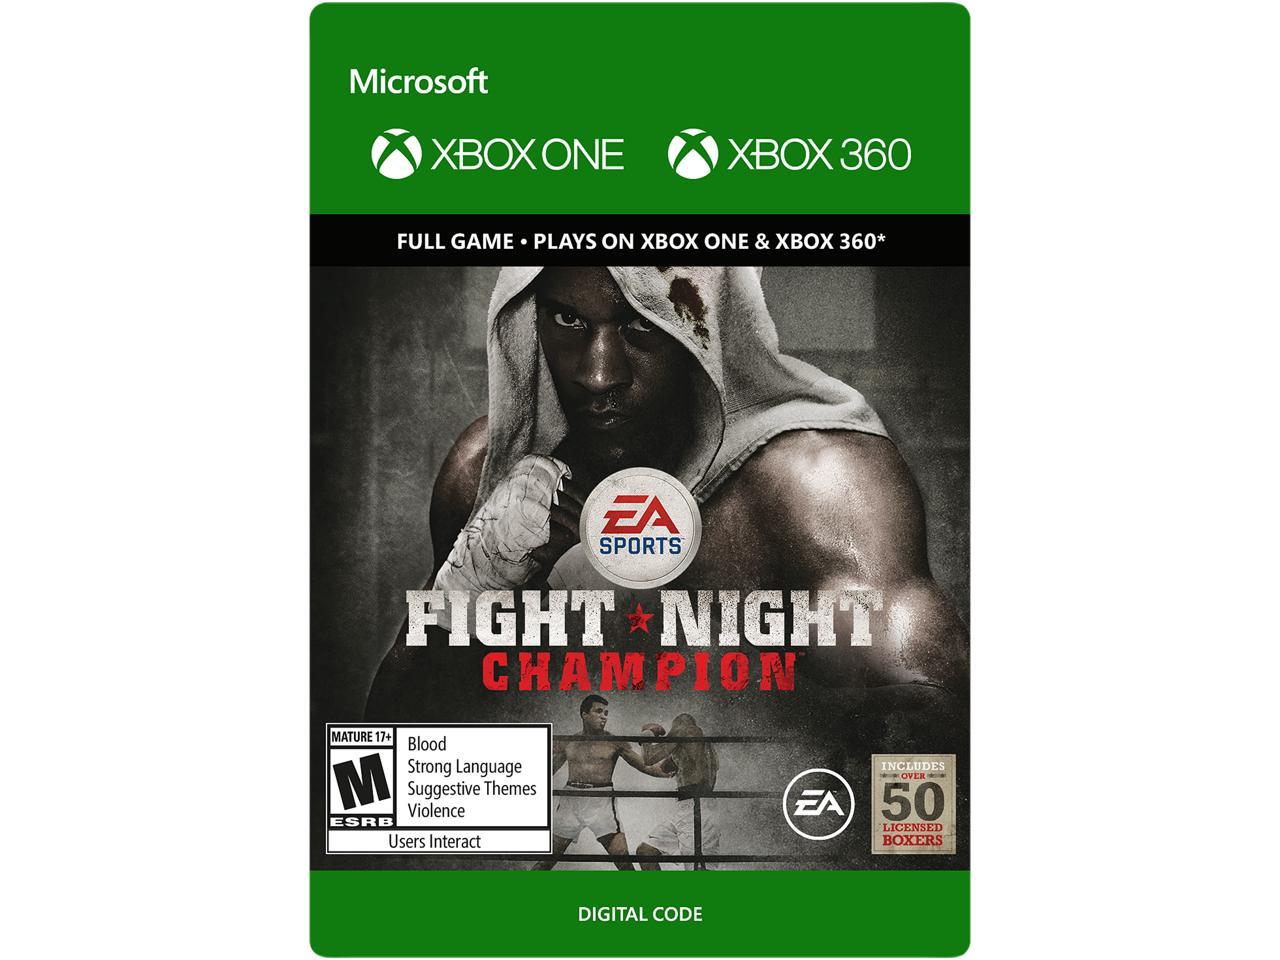 fight night champion cheats for xbox 360